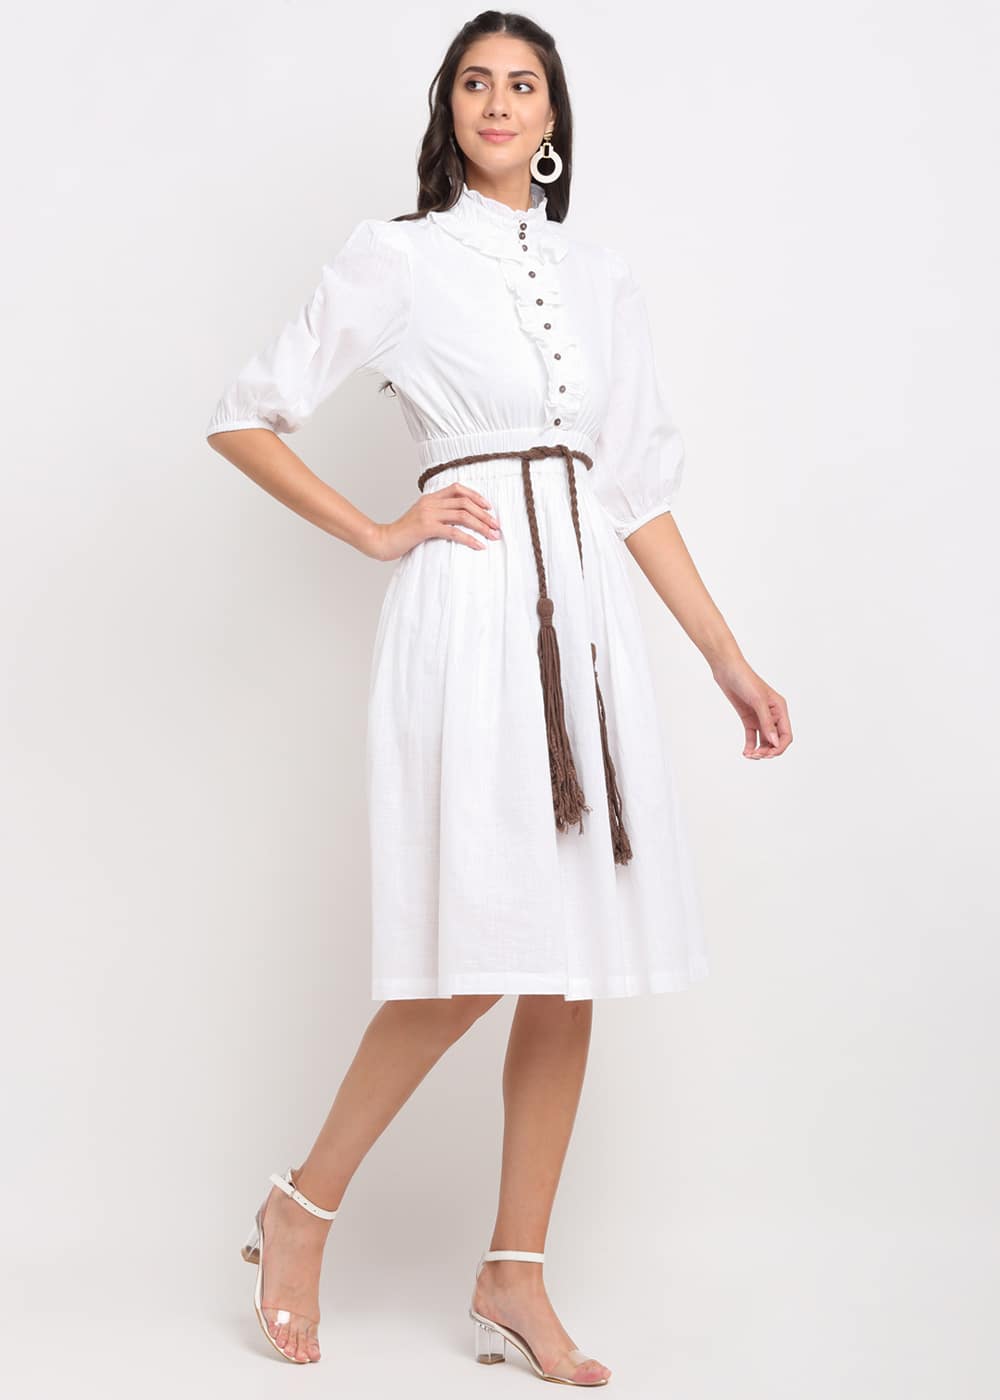 Blanc9 White Dress With Brown Belt